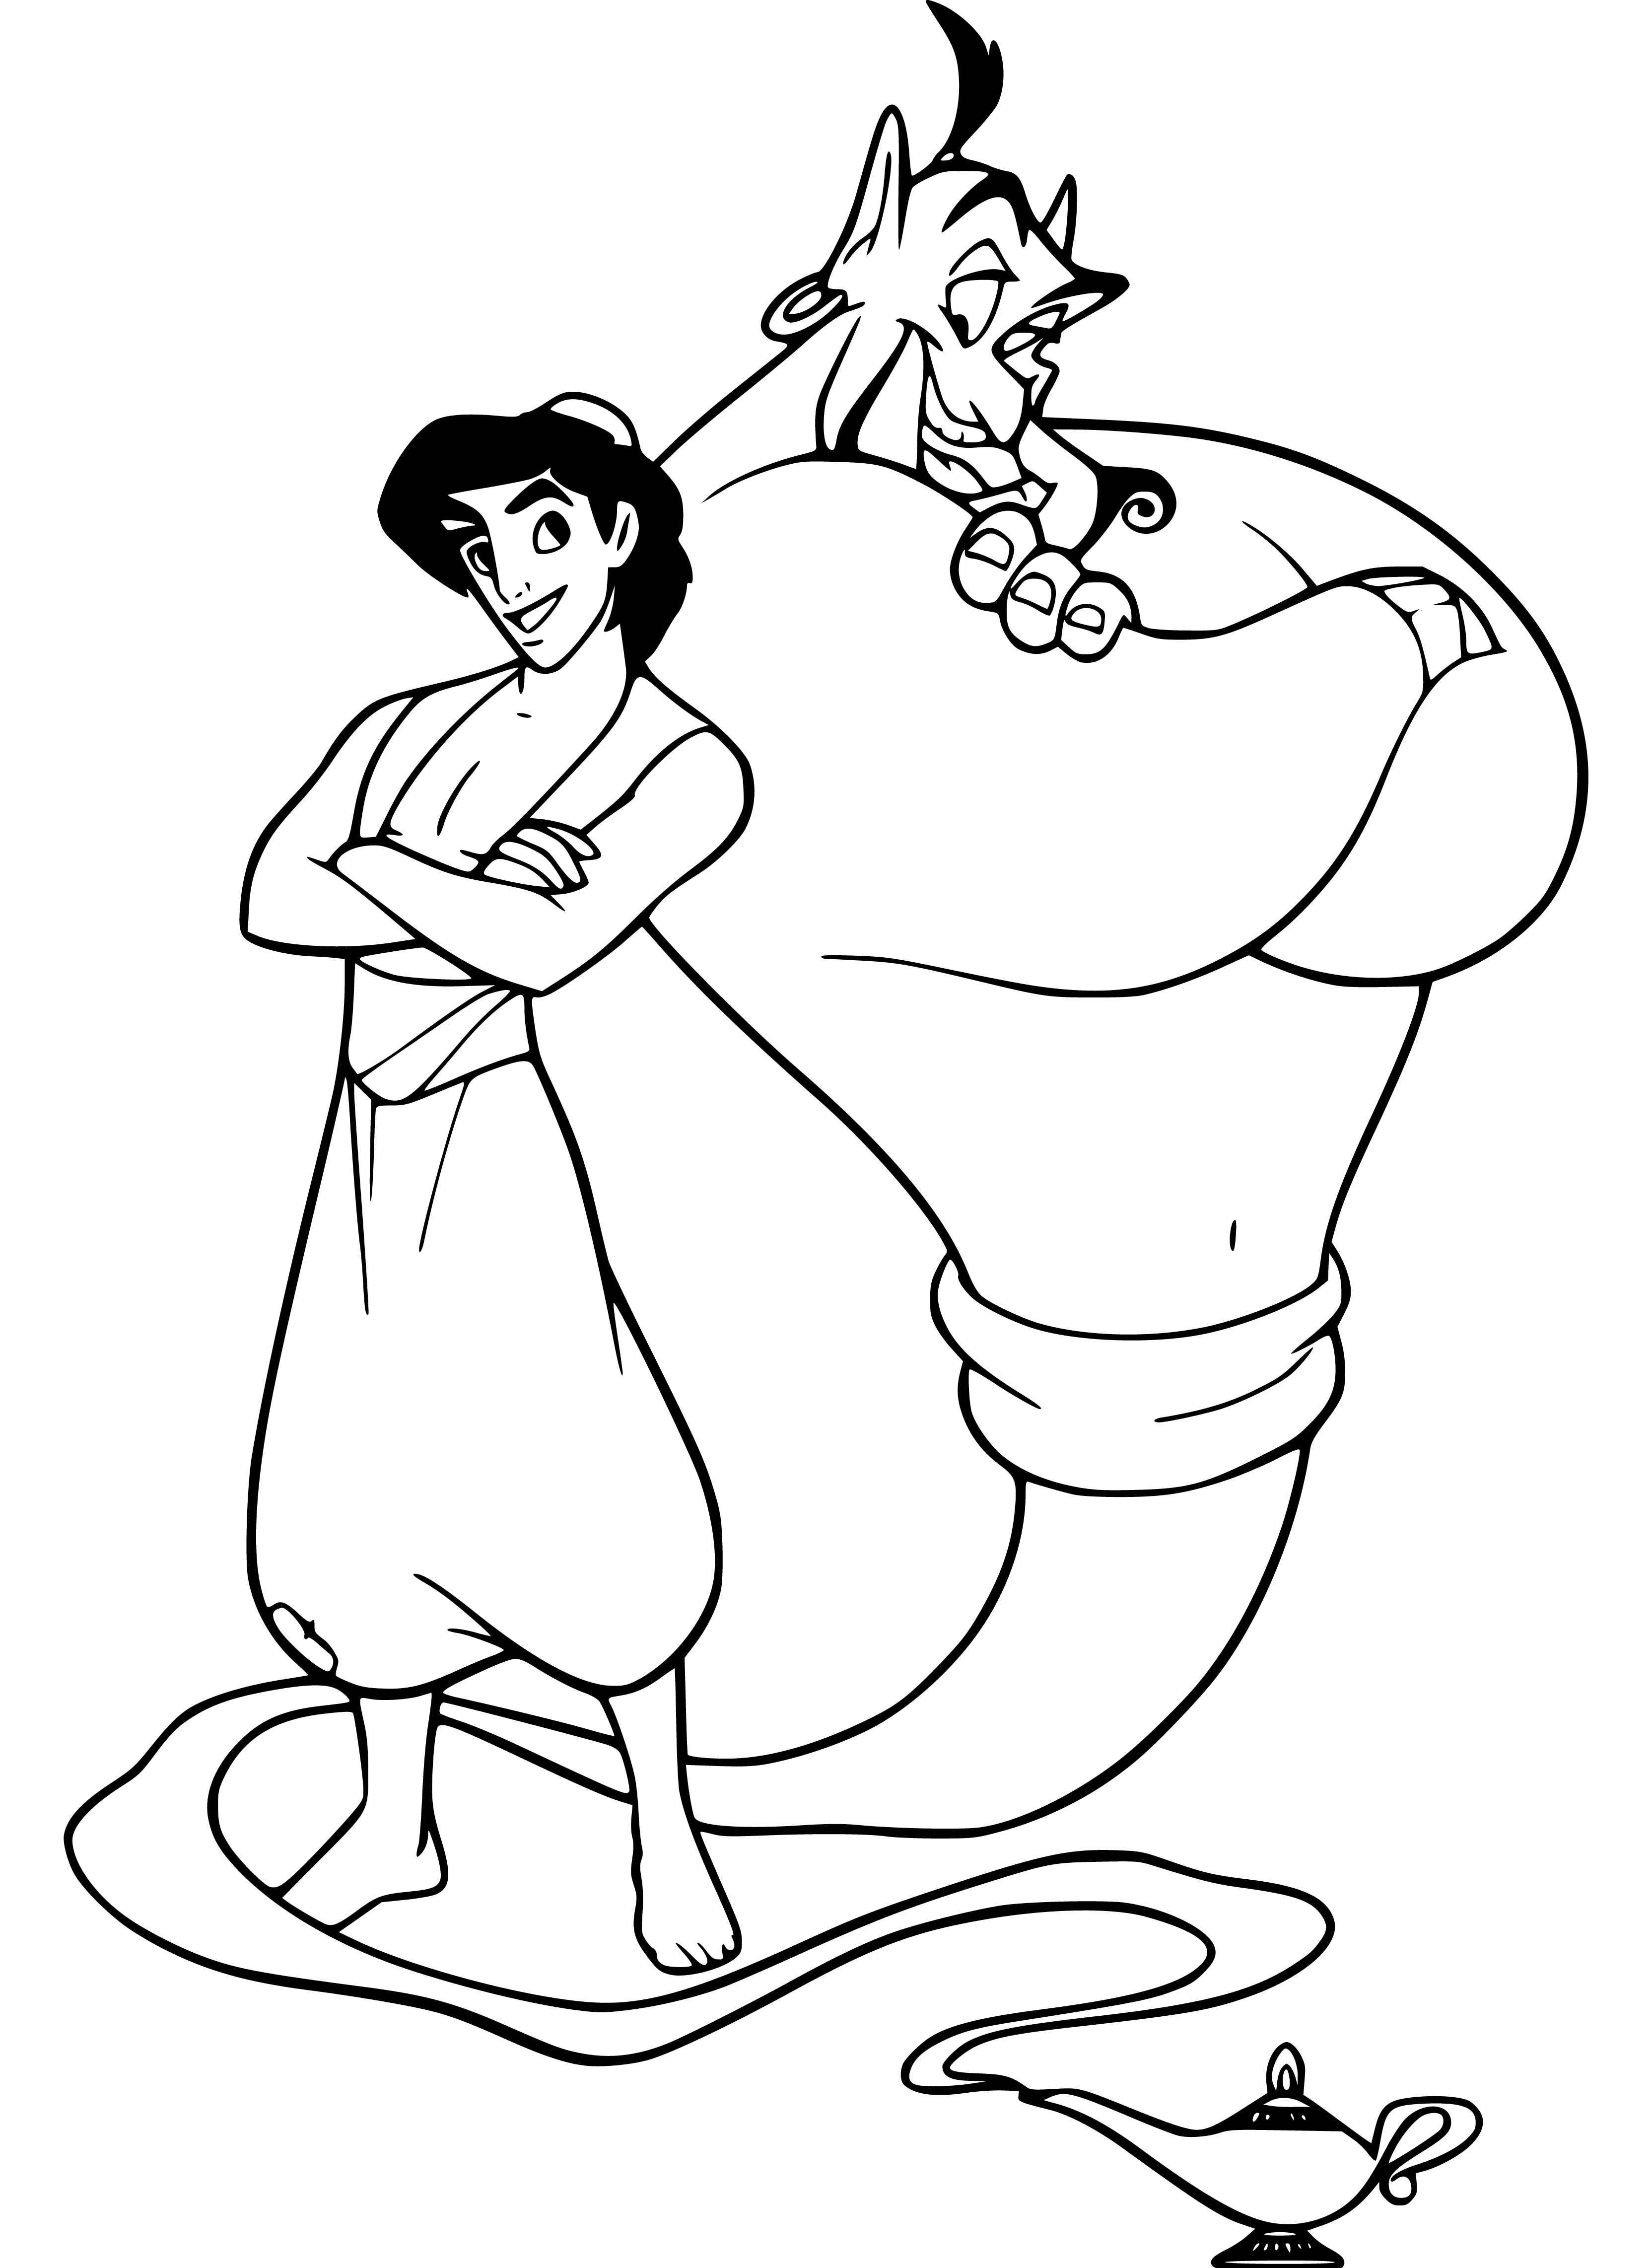 Aladdin and Genie Coloring Page - SheetalColor.com